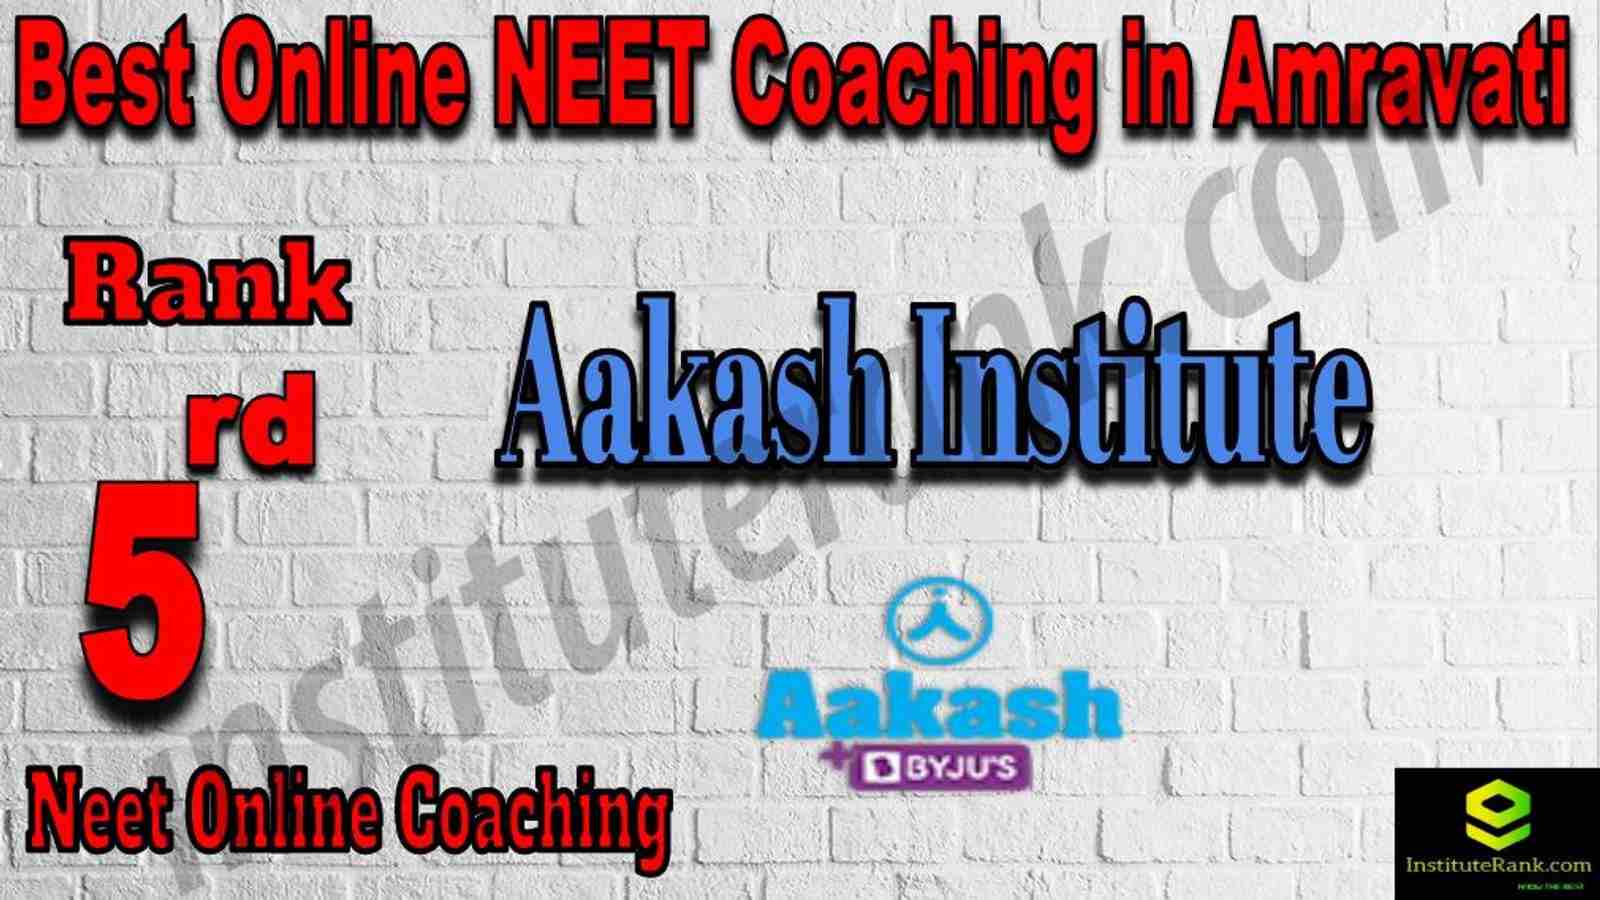 5th Best Online Neet Coaching in Amravati